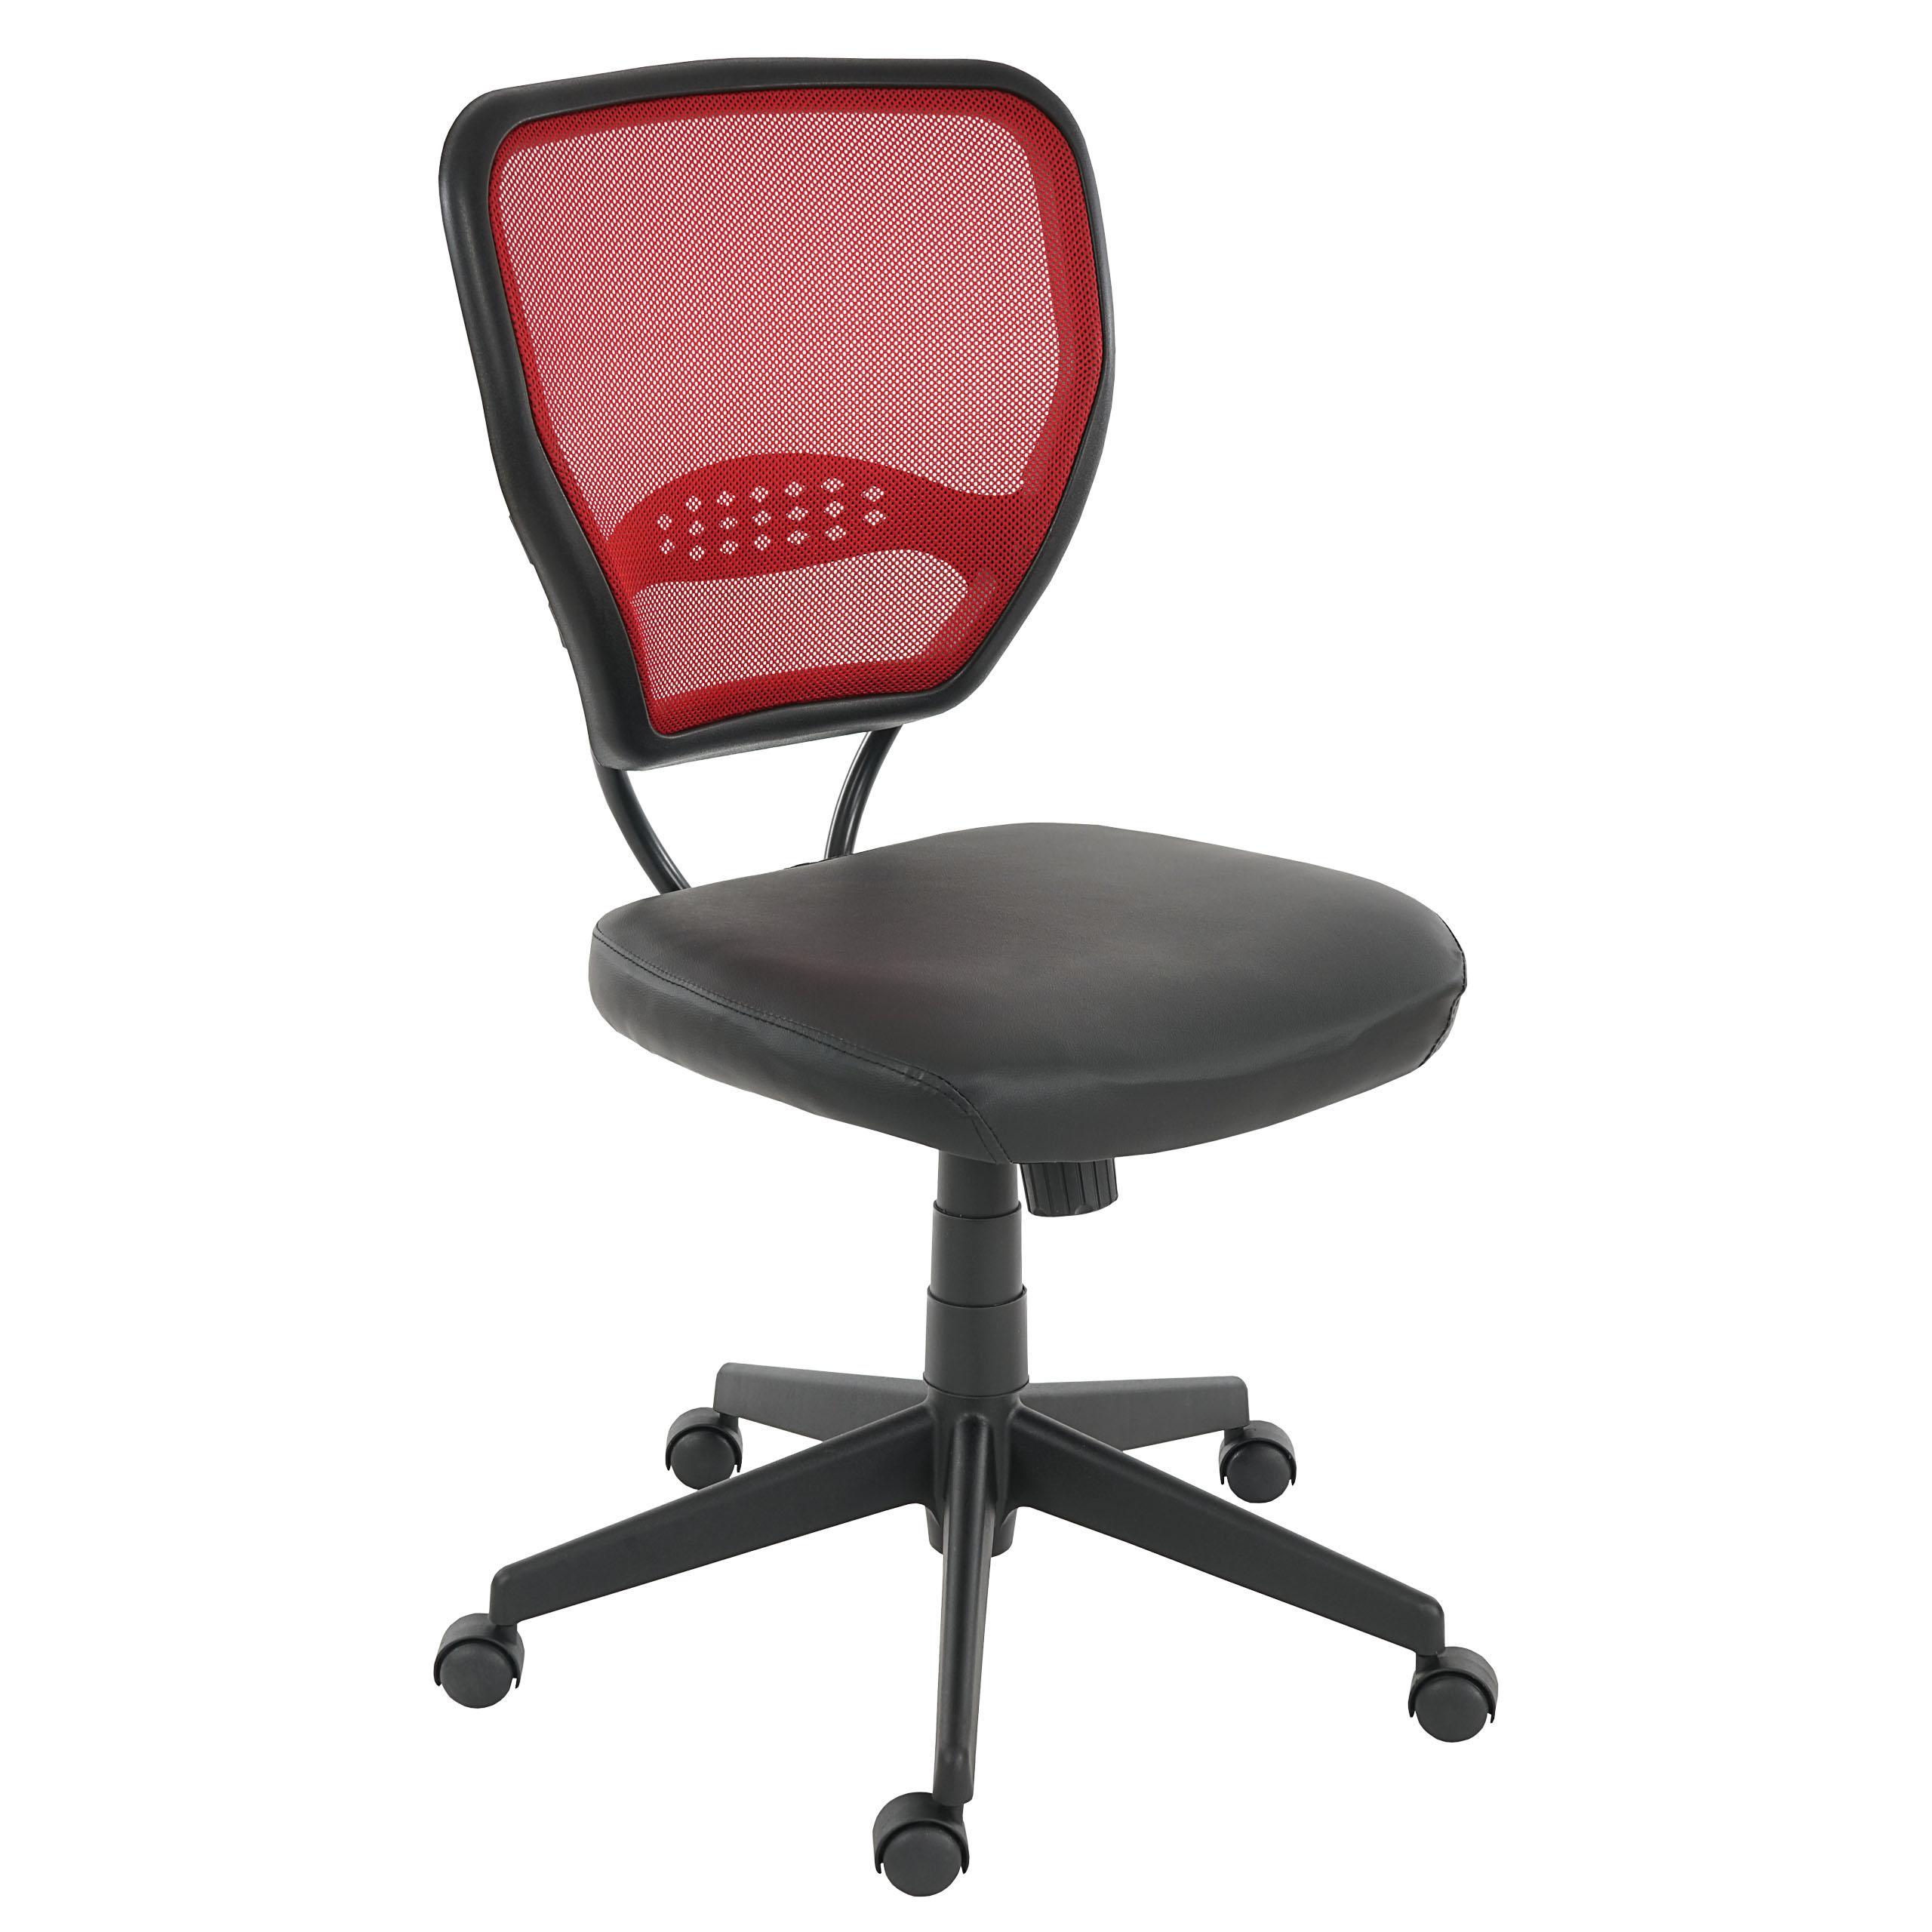 XXL-Bürostuhl TENOYA LEDER OHNE ARMLEHNEN, bequeme Sitzpolsterung, Rückenlehne mit Netzbezug, Farbe Rot